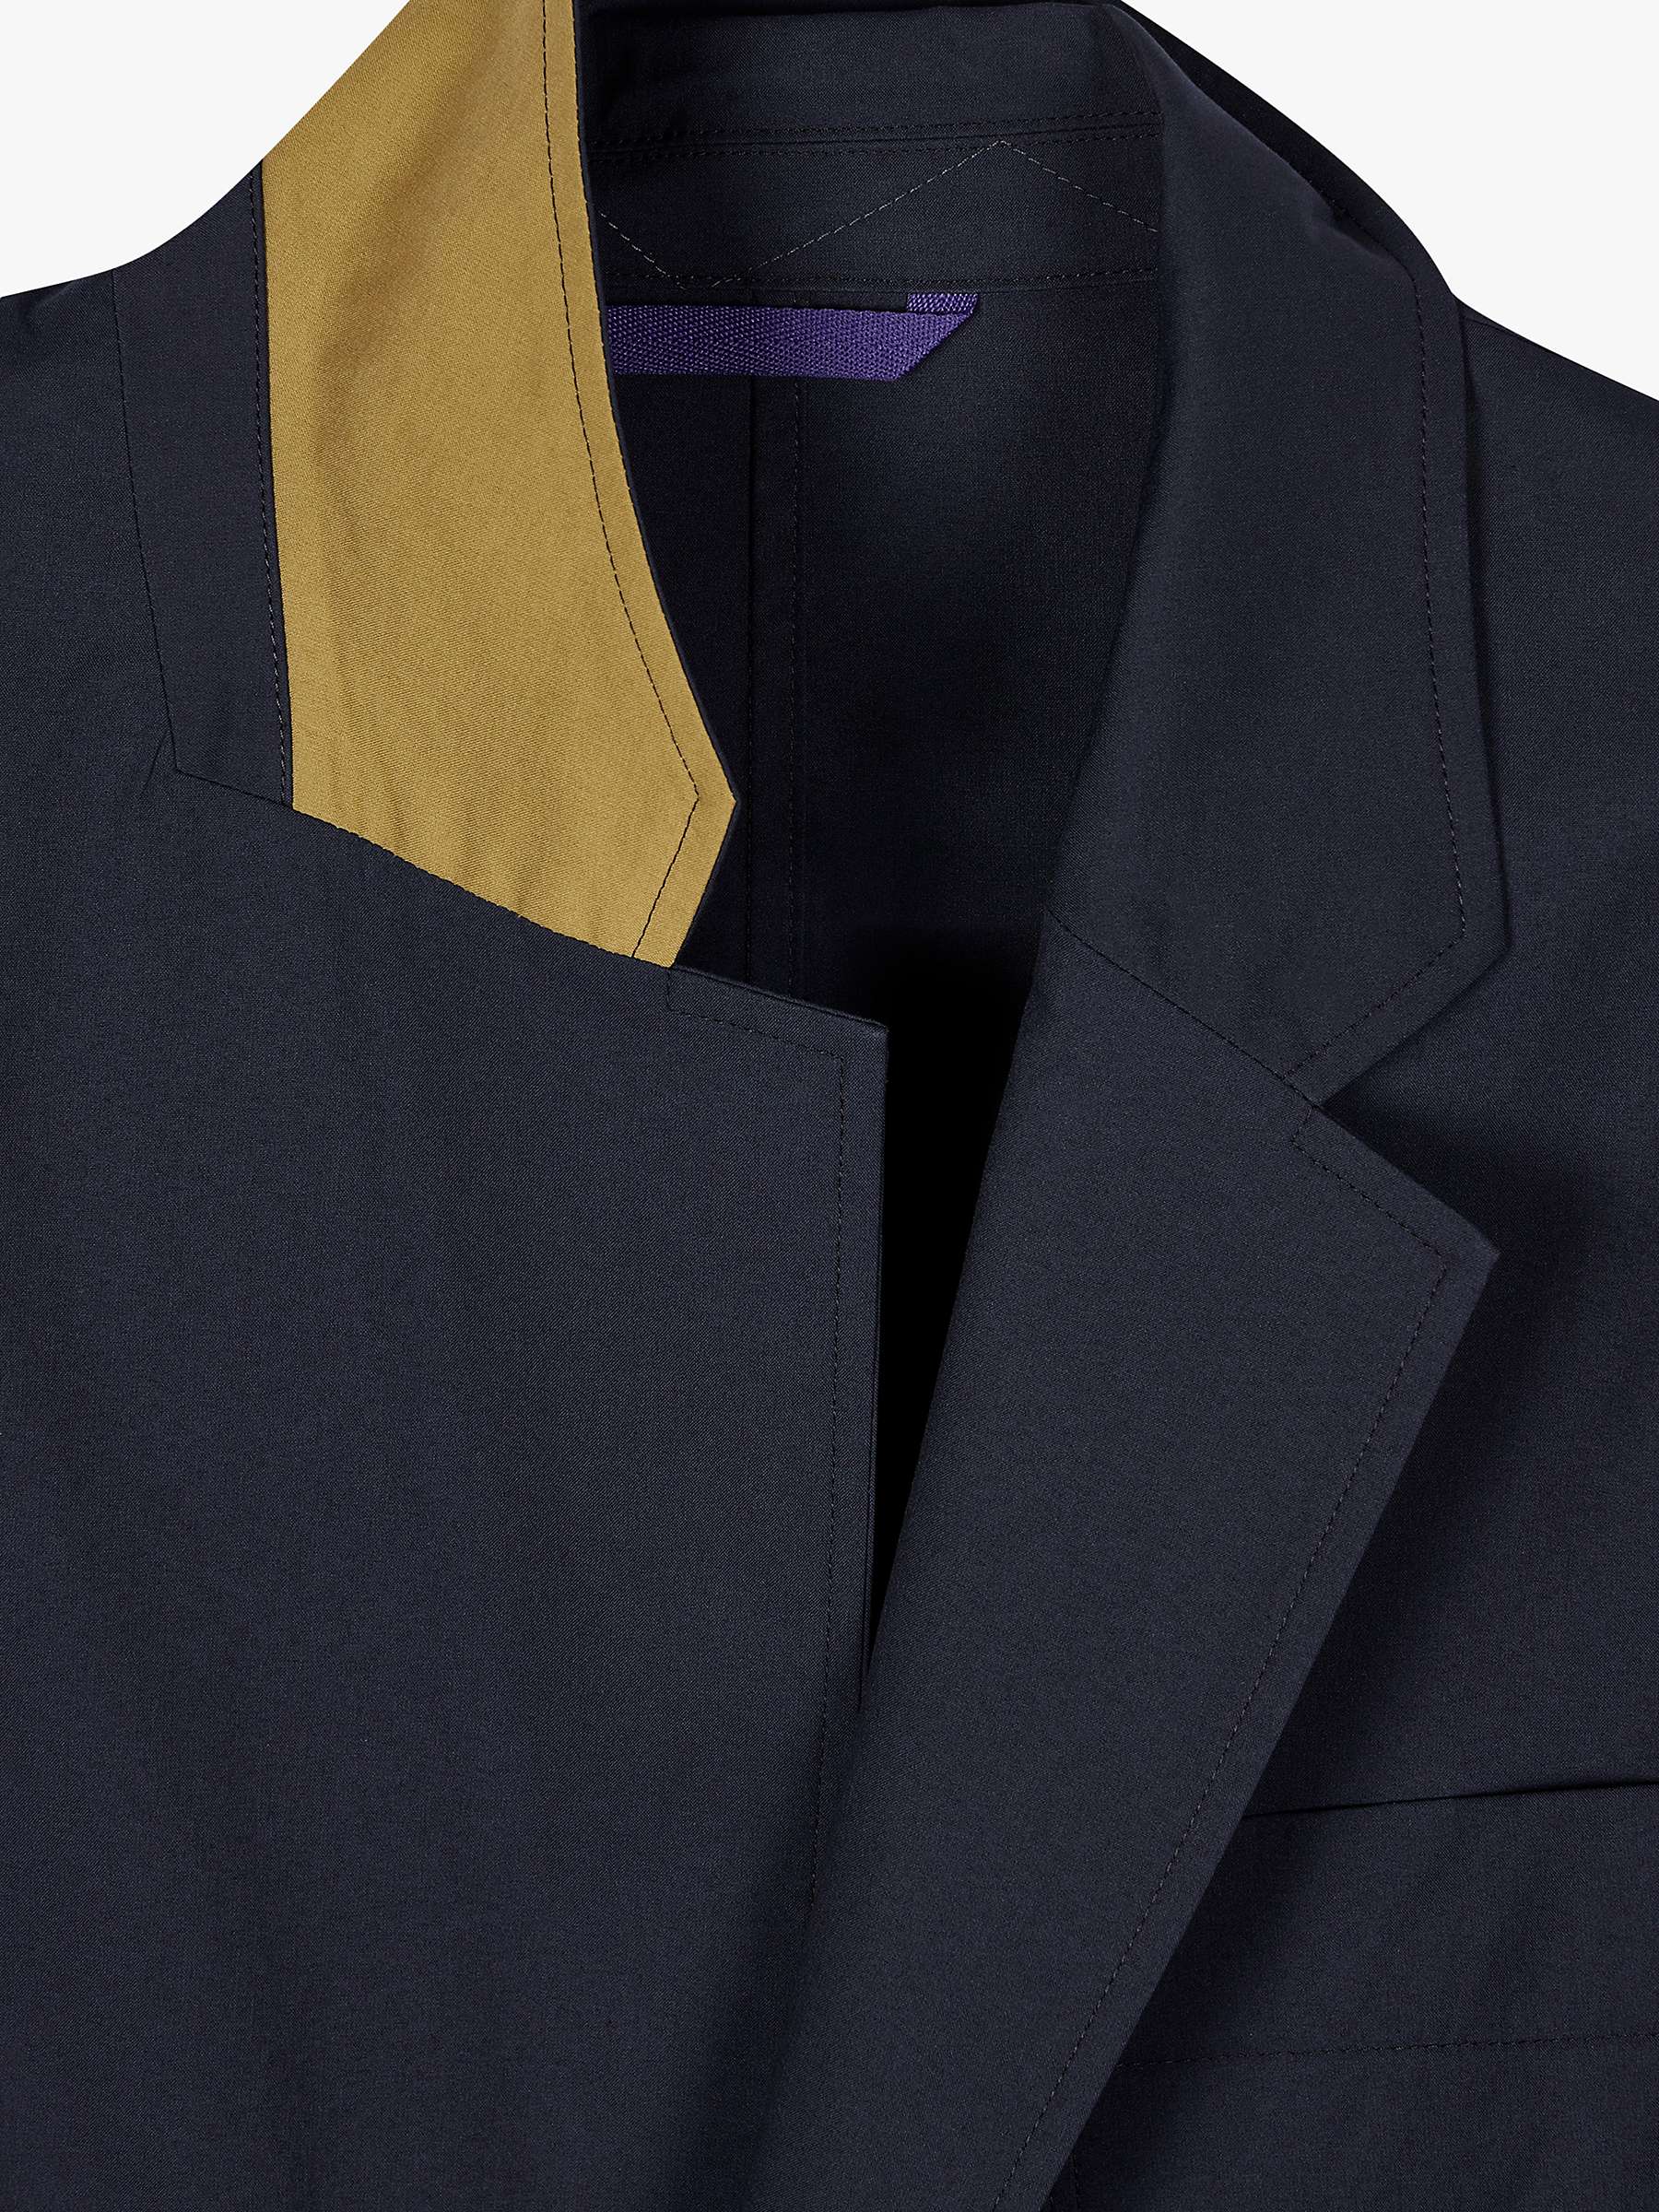 Buy PS Paul Smith Organic Cotton Blend Suit Jacket Online at johnlewis.com